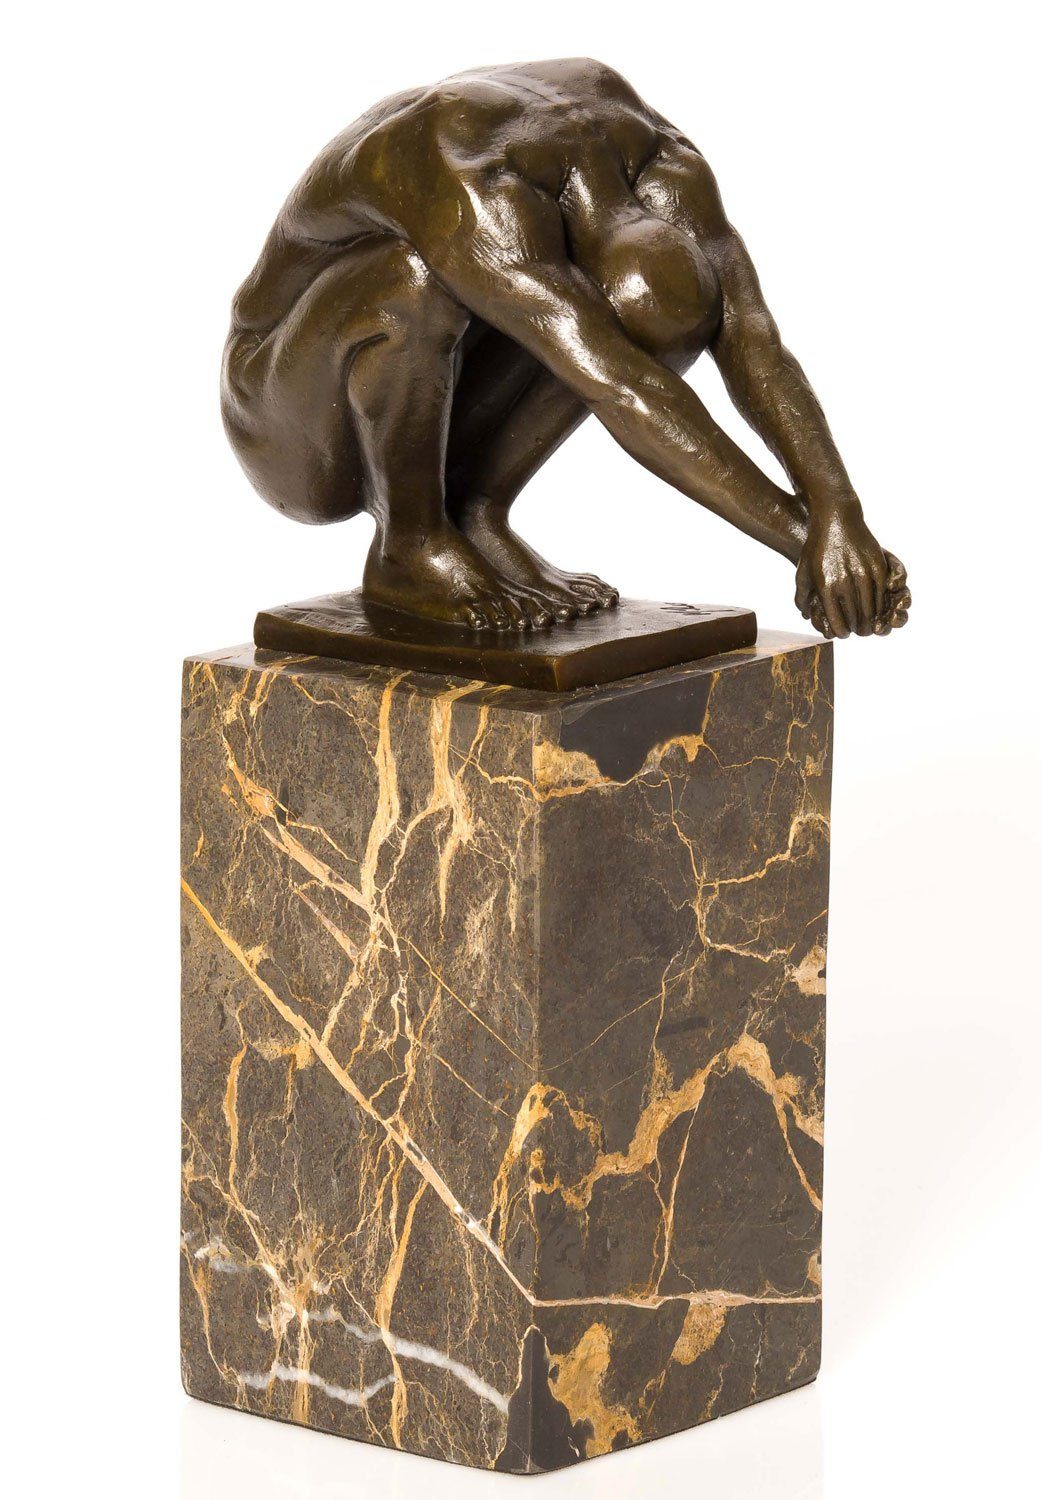 Aubaho Skulptur Bronze Schwimmer Turmspringer Skulptur Akt Erotik Skulptur Figur antik